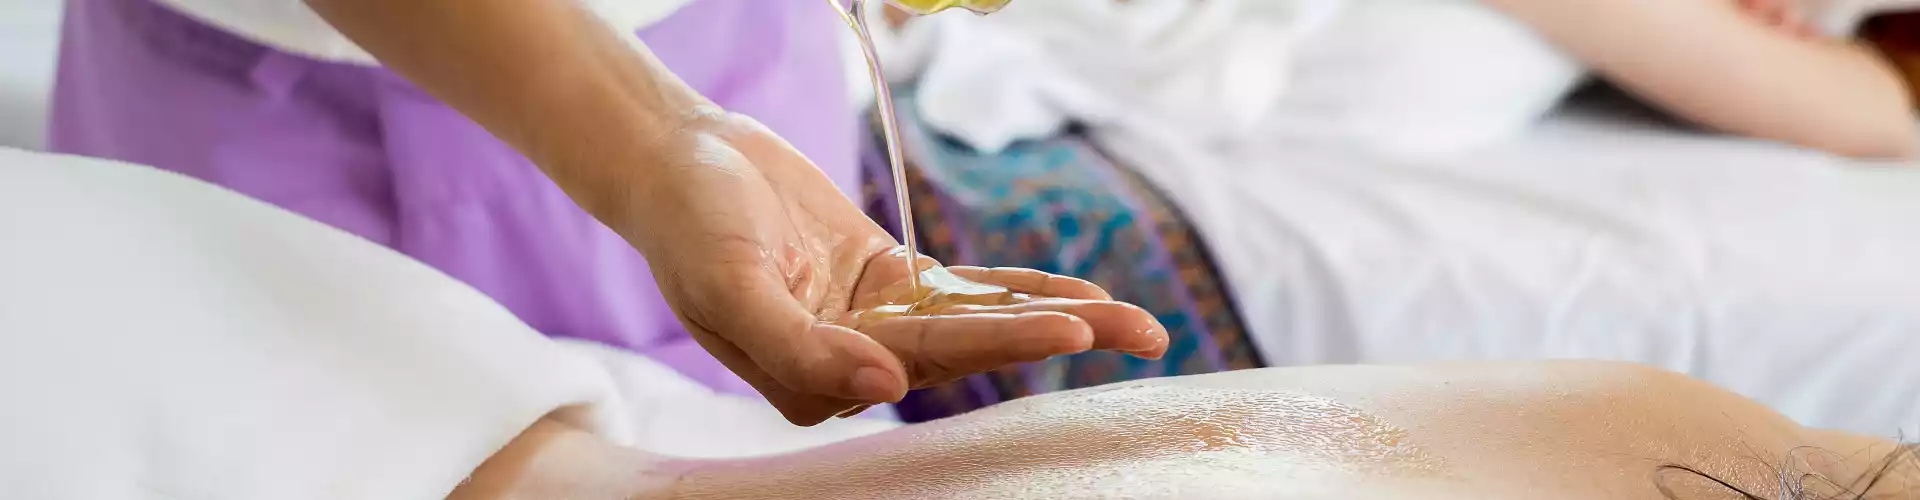 Ayurvedic Self-Care Tools: Self-Massage with Oil